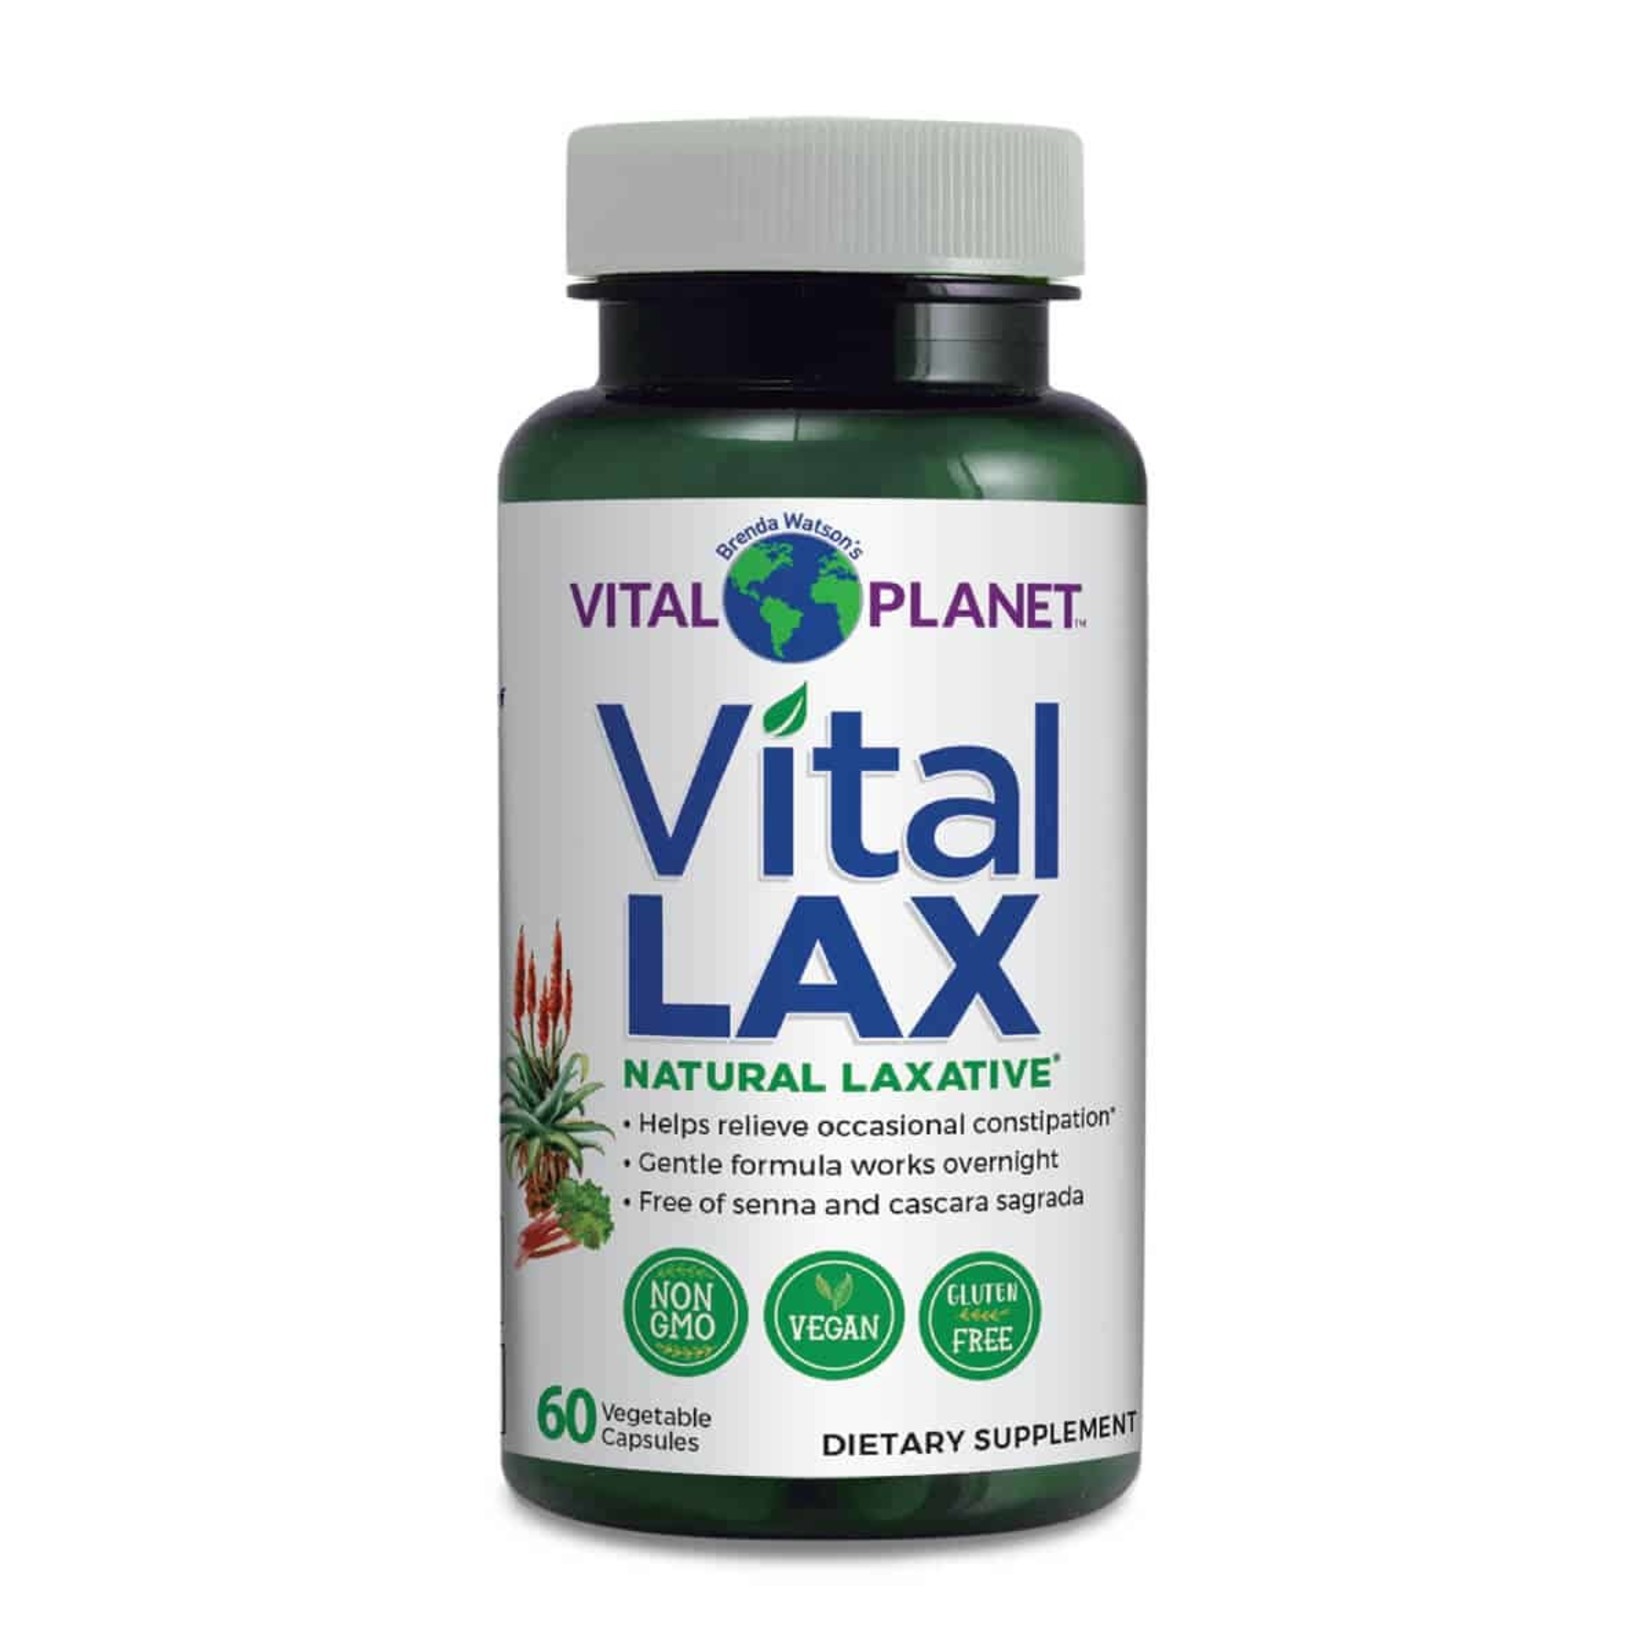 Vital Planet Vital Planet - Vital Lax Natural Laxative - 60 Veg Capsules